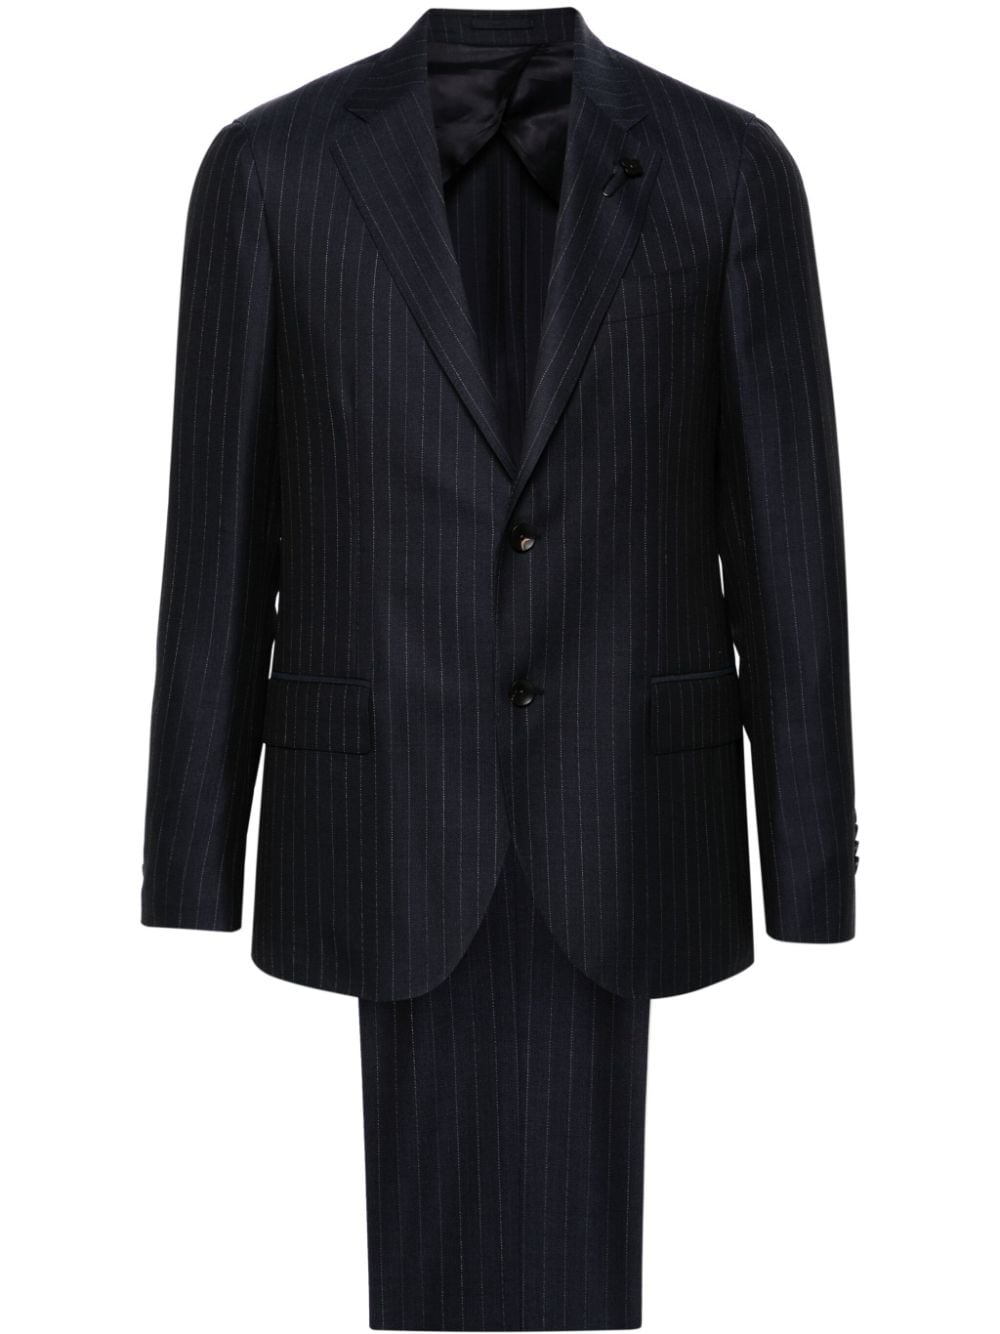 Suit pinstripe pattern